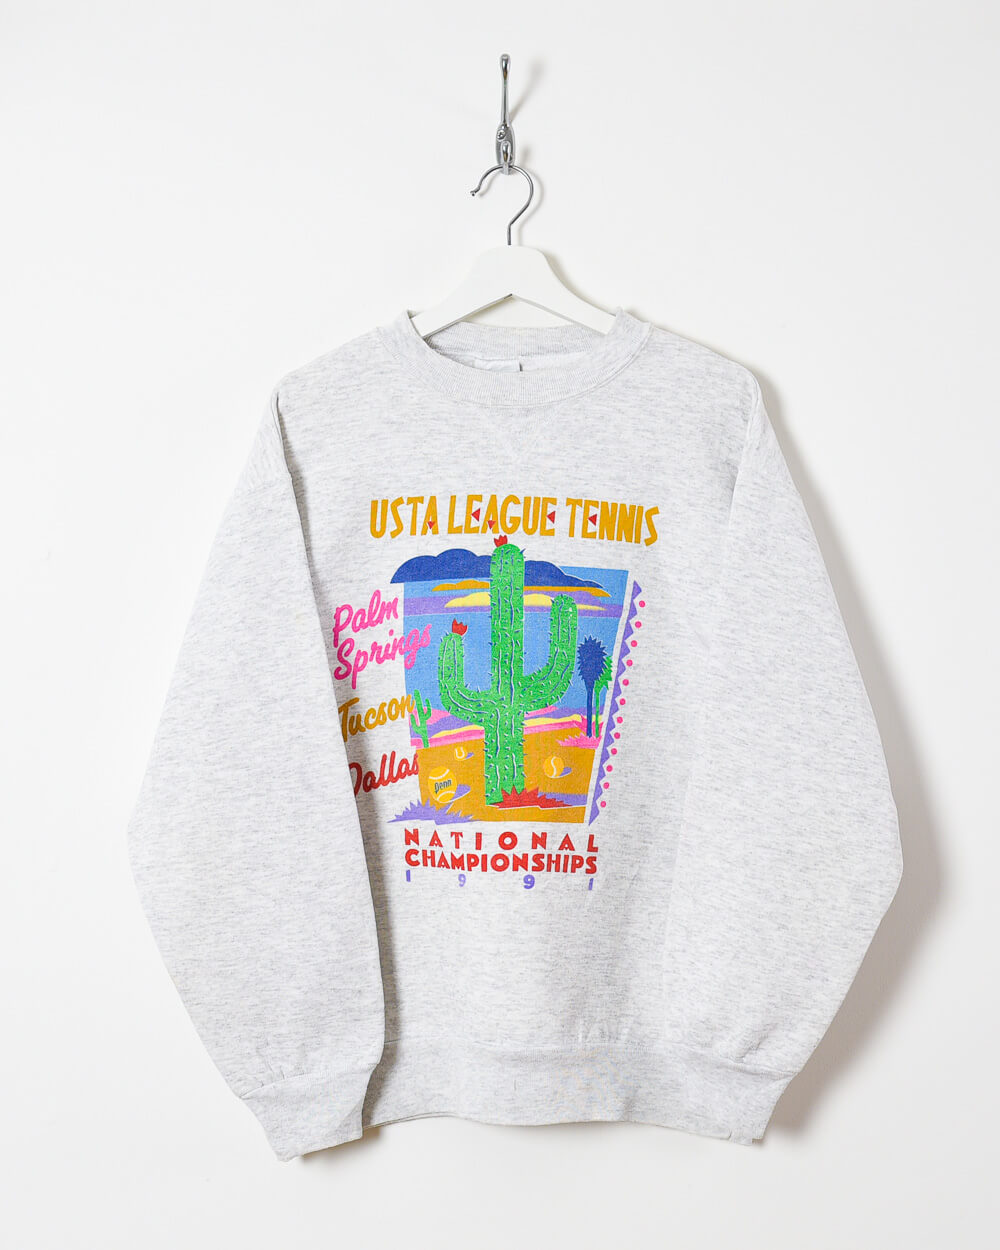 USTA League Tennis 1991 National Championships Sweatshirt - Medium - Domno Vintage 90s, 80s, 00s Retro and Vintage Clothing 